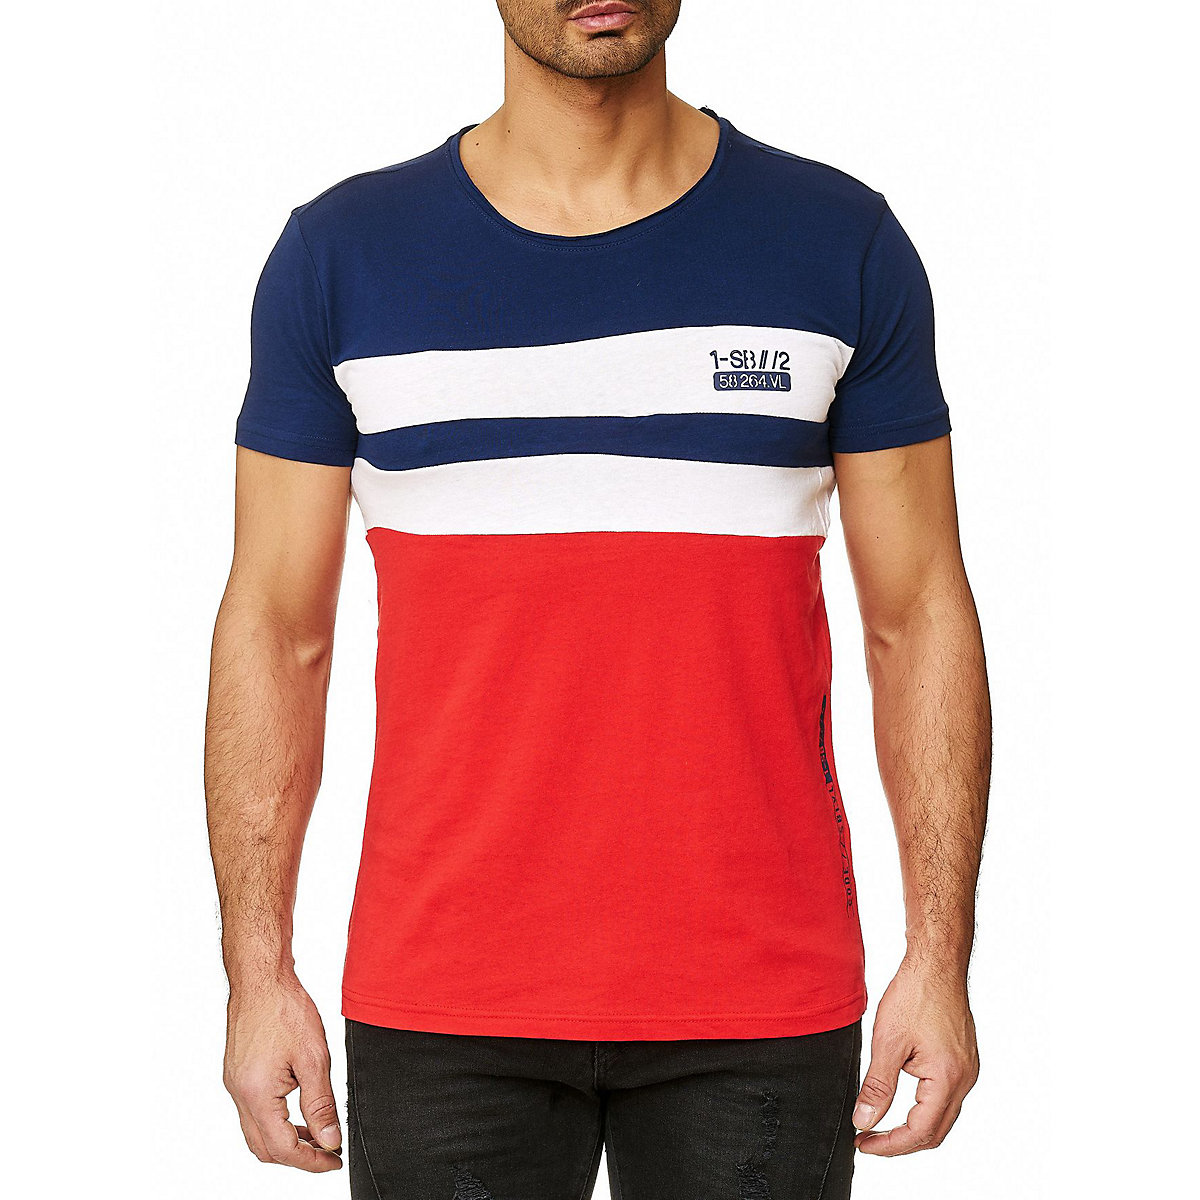 SUBLEVEL T-Shirt Farbig Streifen Colorblock O-Neck rot